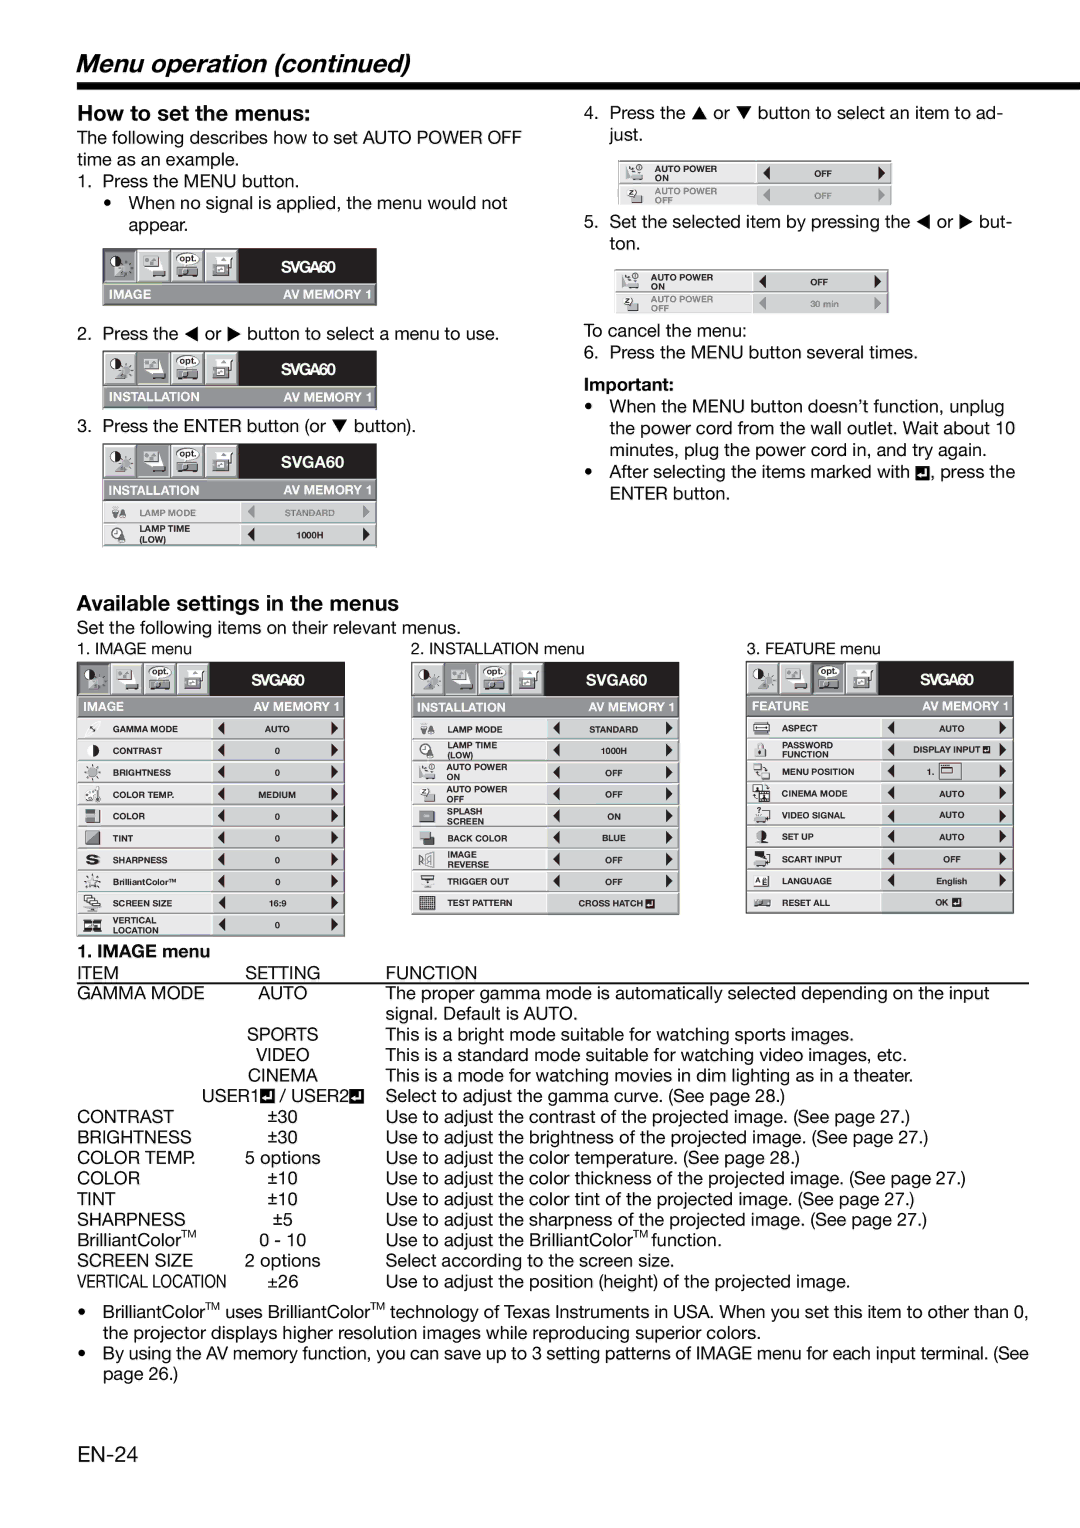 Mitsubishi Electronics HD1000 user manual Menu operation, How to set the menus, Available settings in the menus, Image menu 